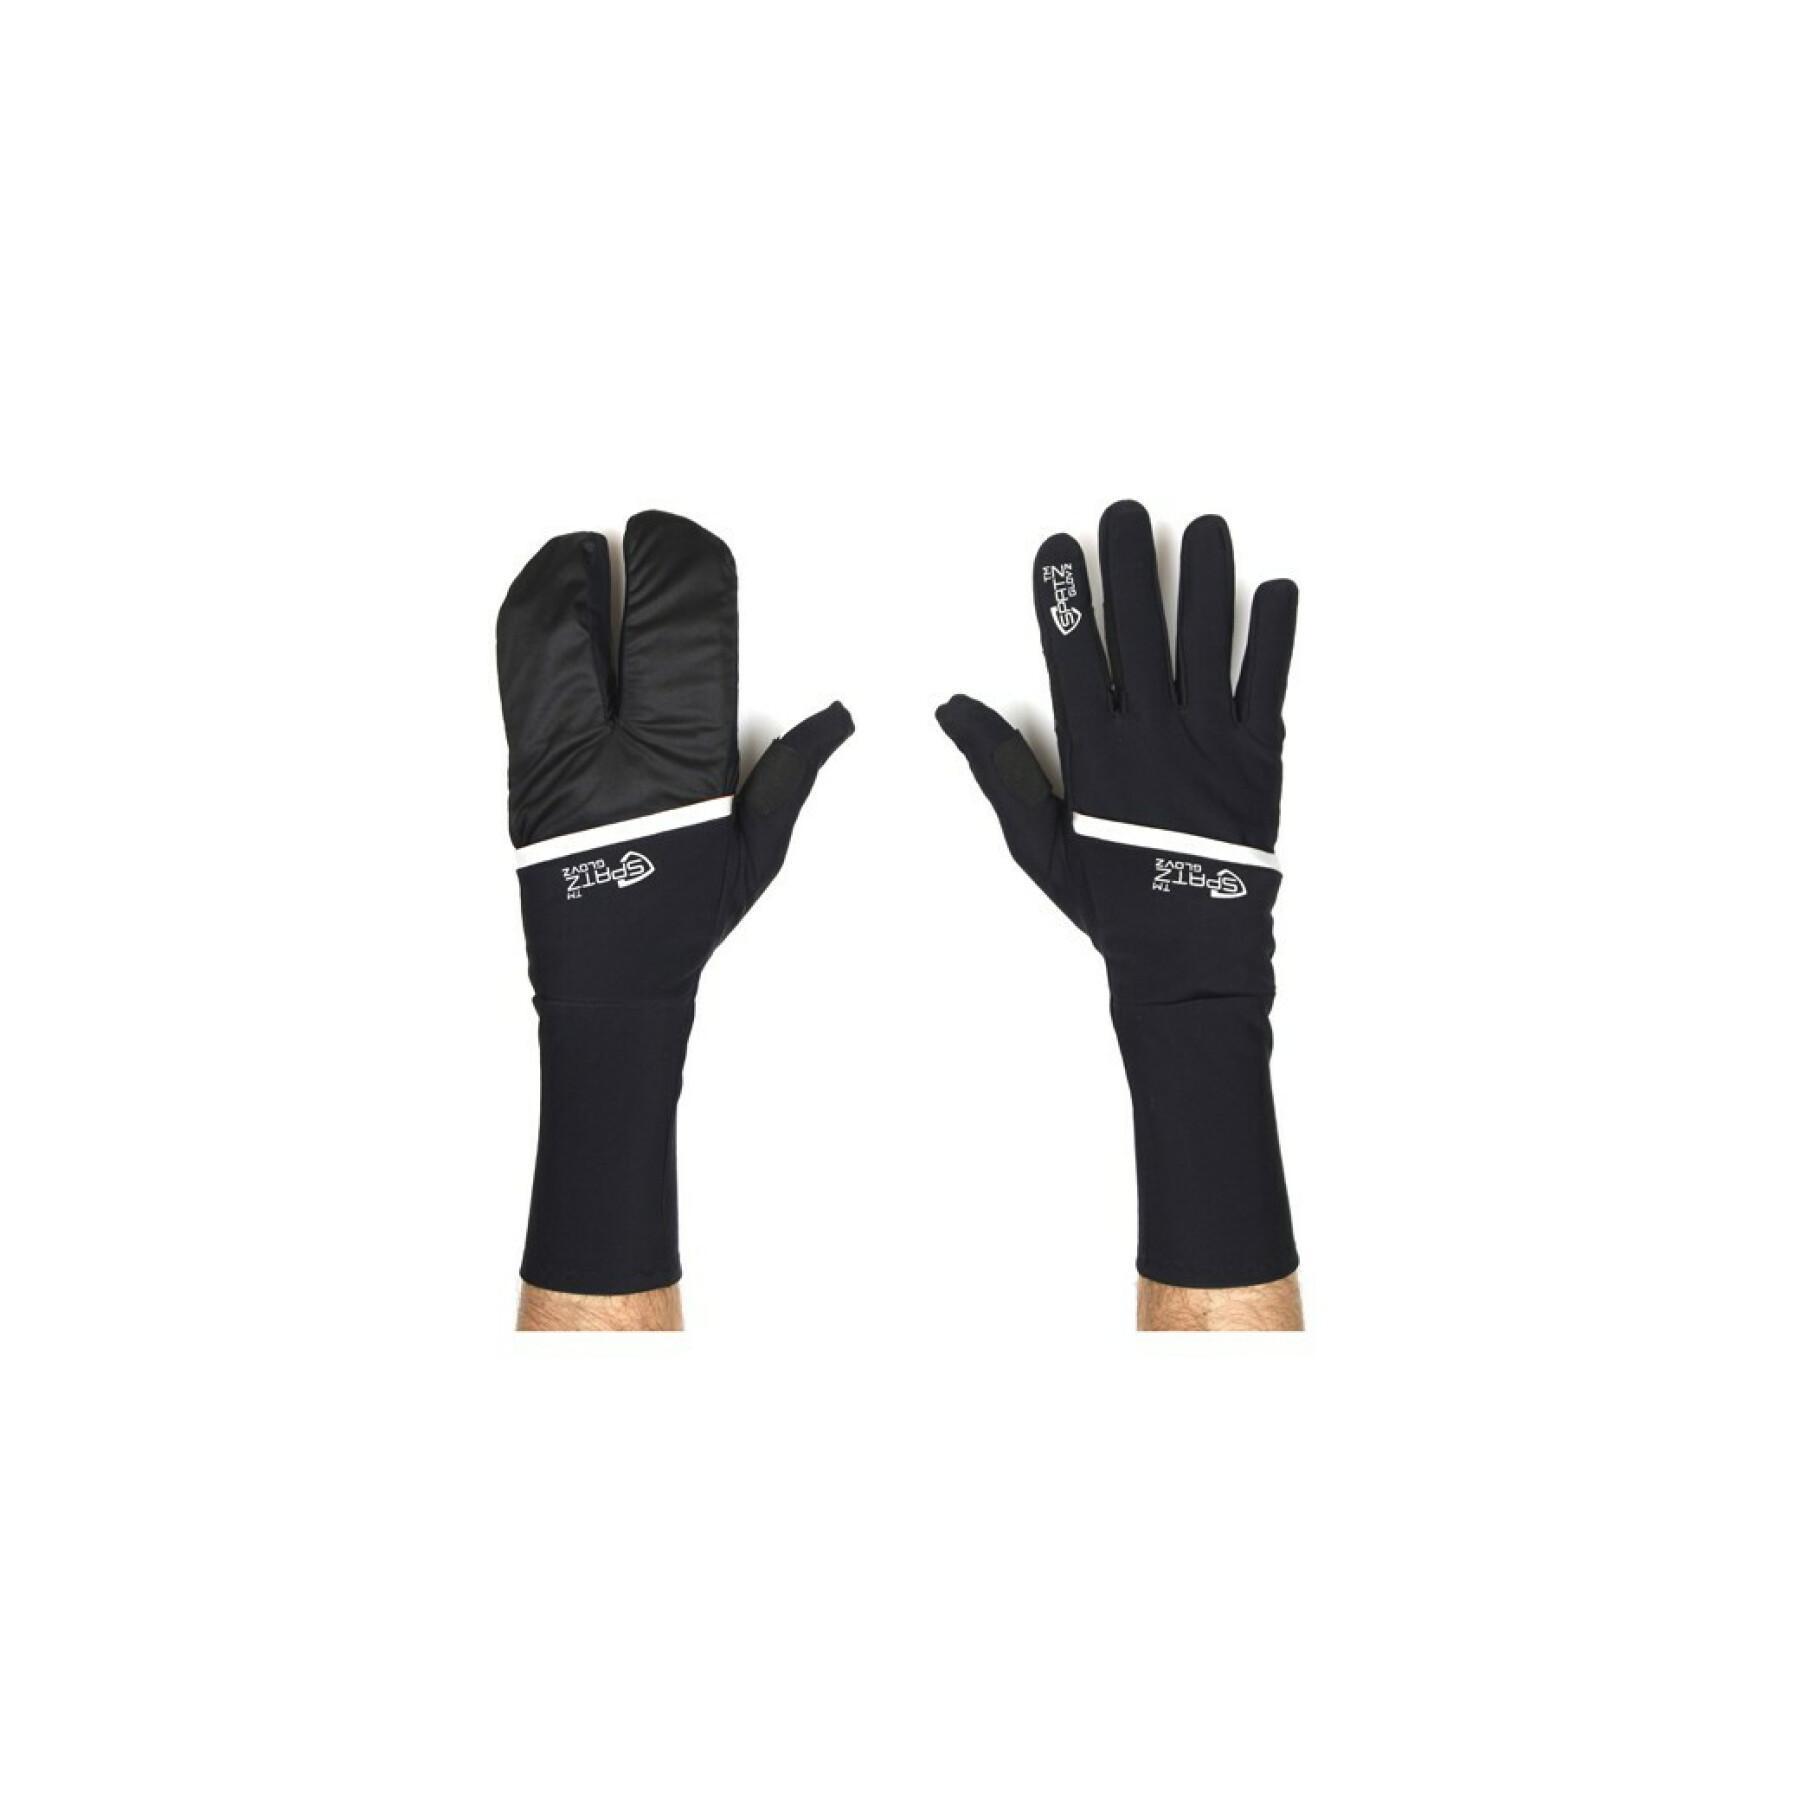 Gloves Spatzwear glovz race